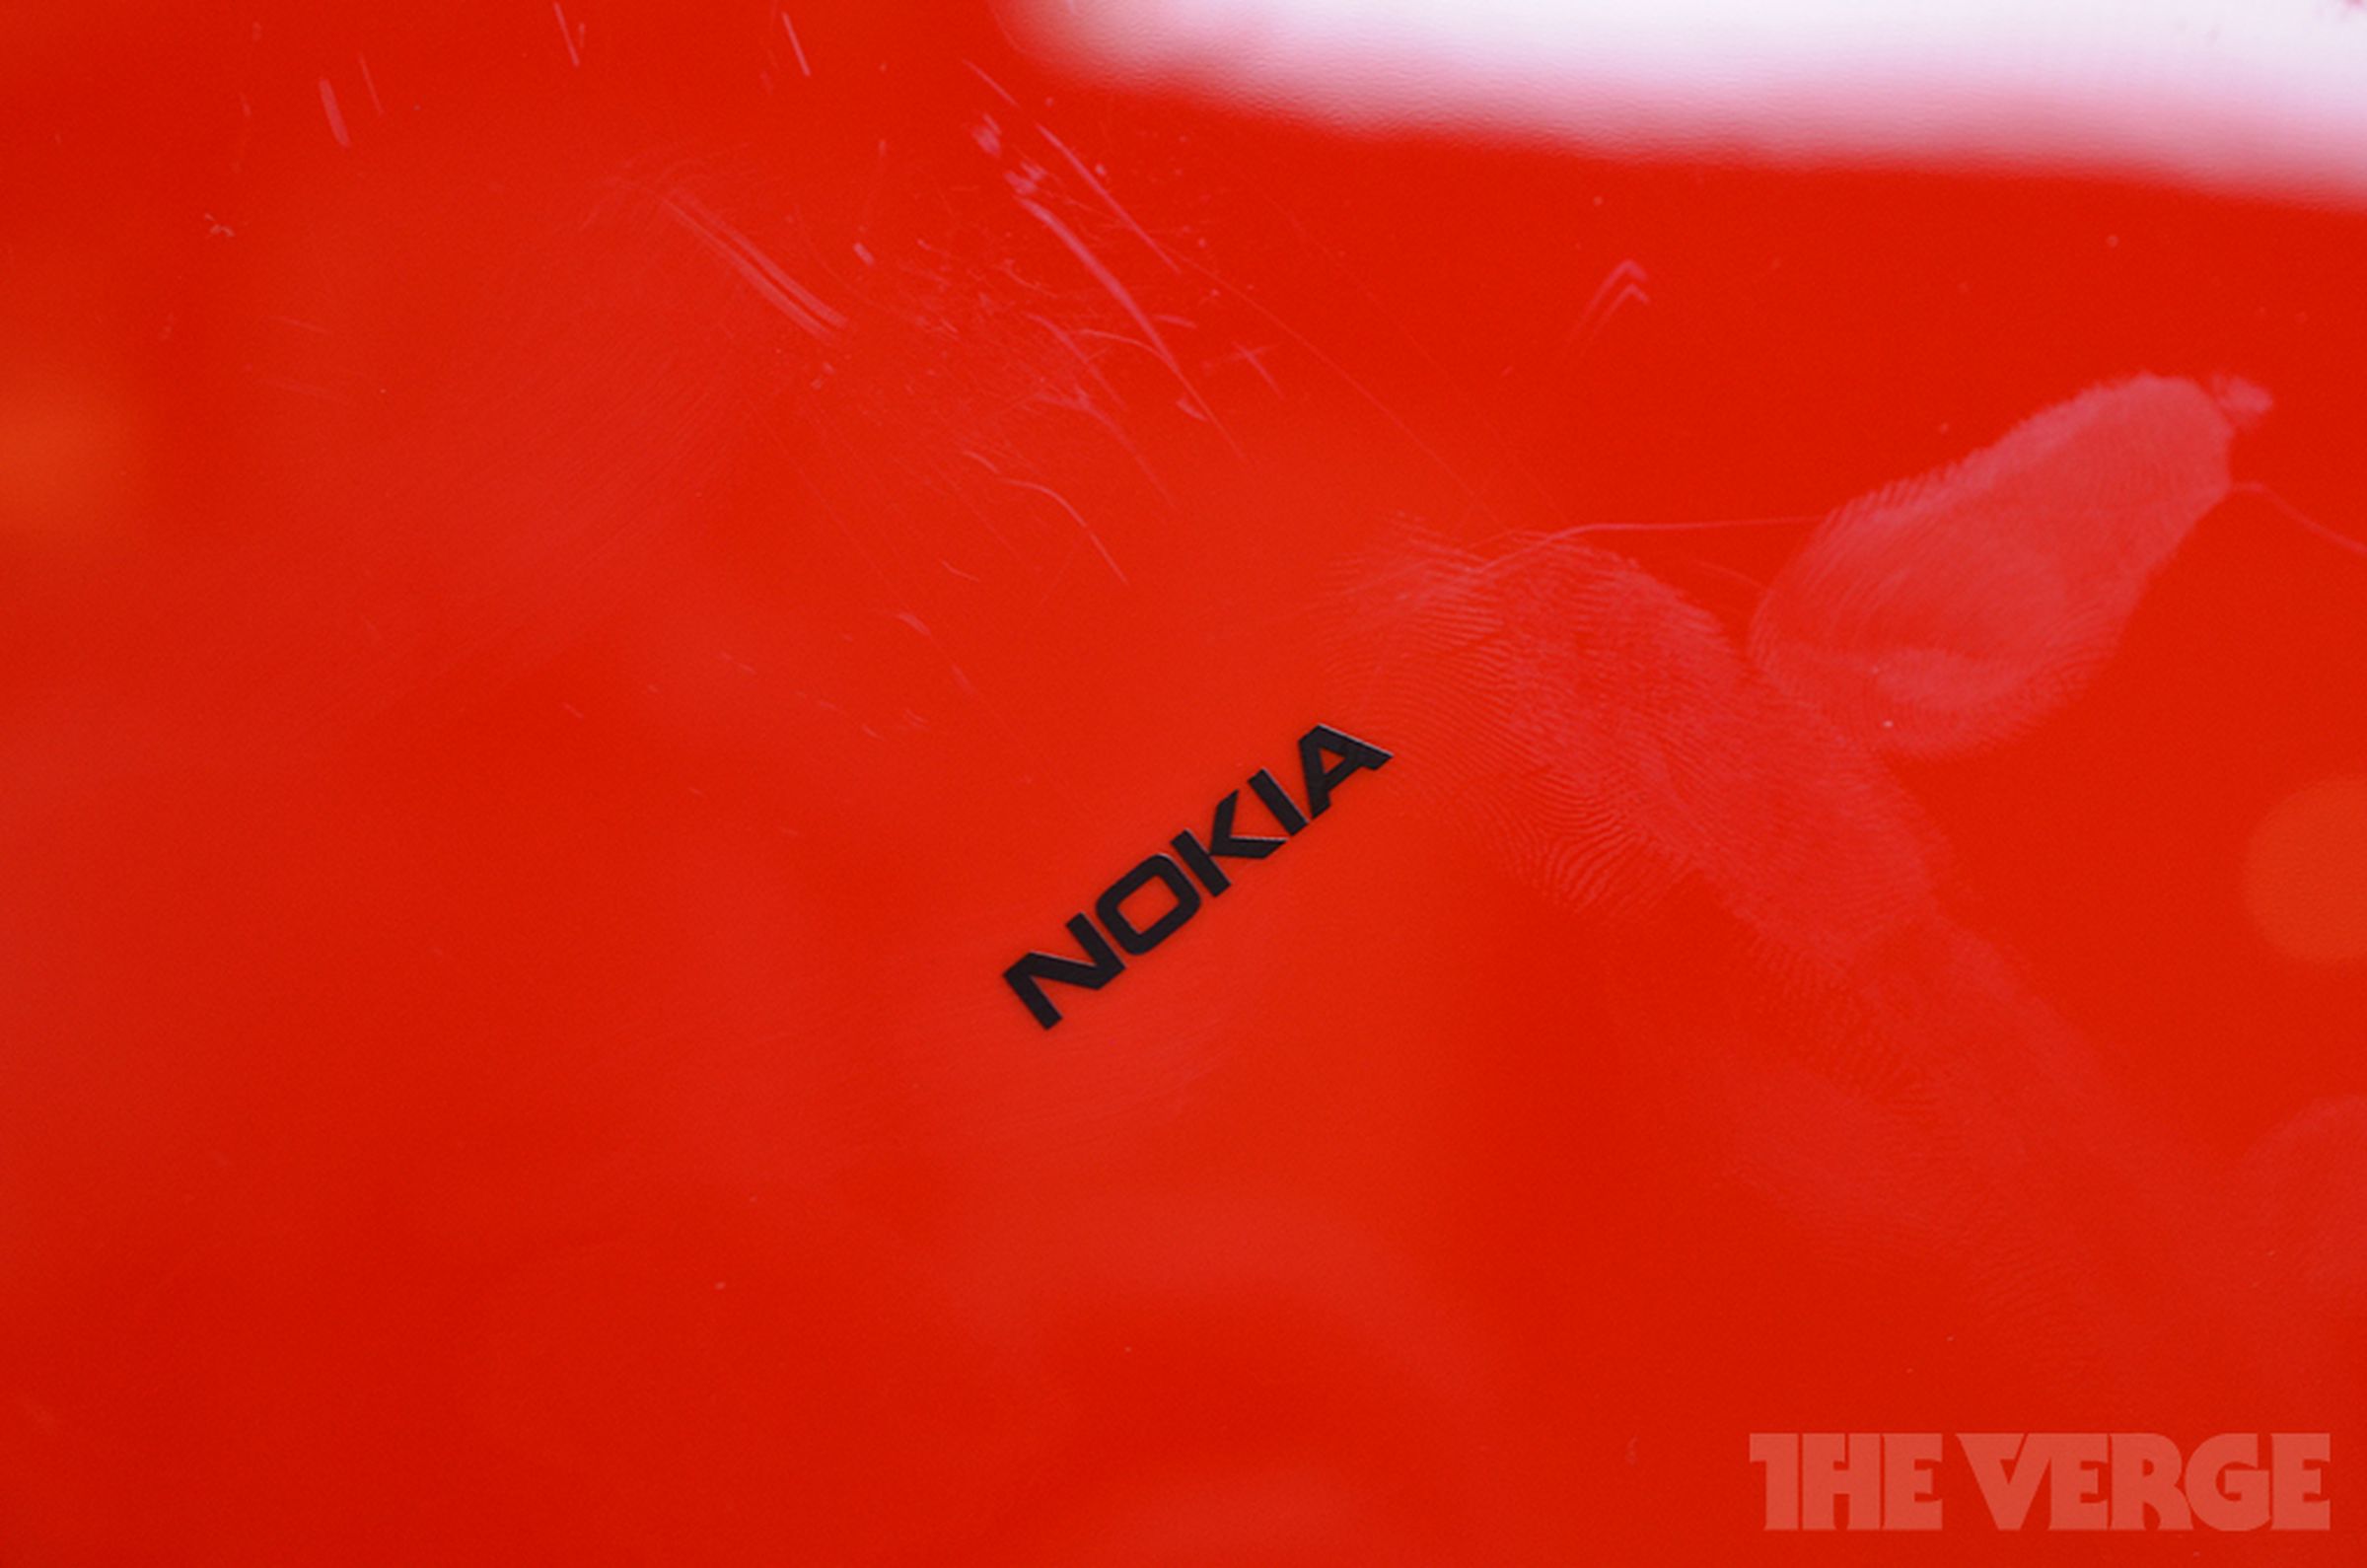 Nokia Lumia 2520 hands-on photos